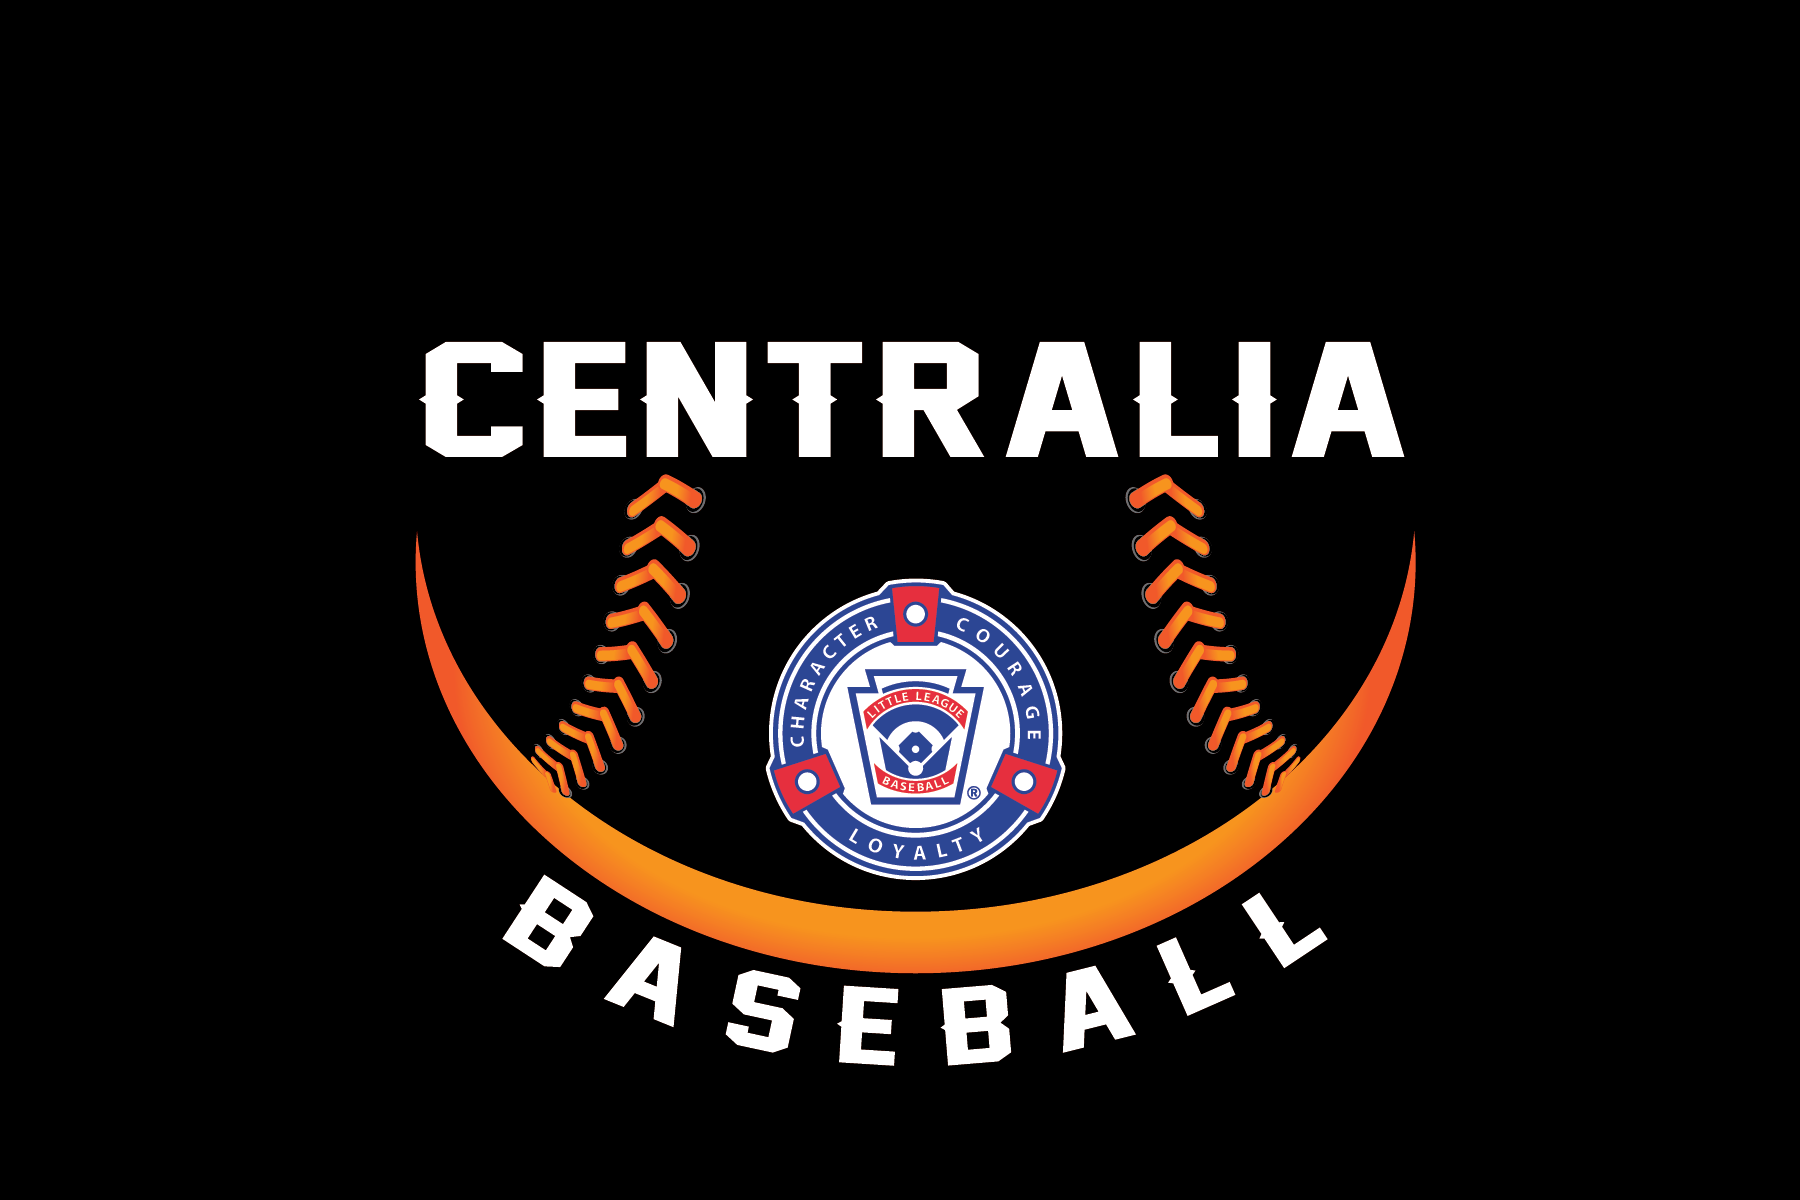 Centralia Little League logo